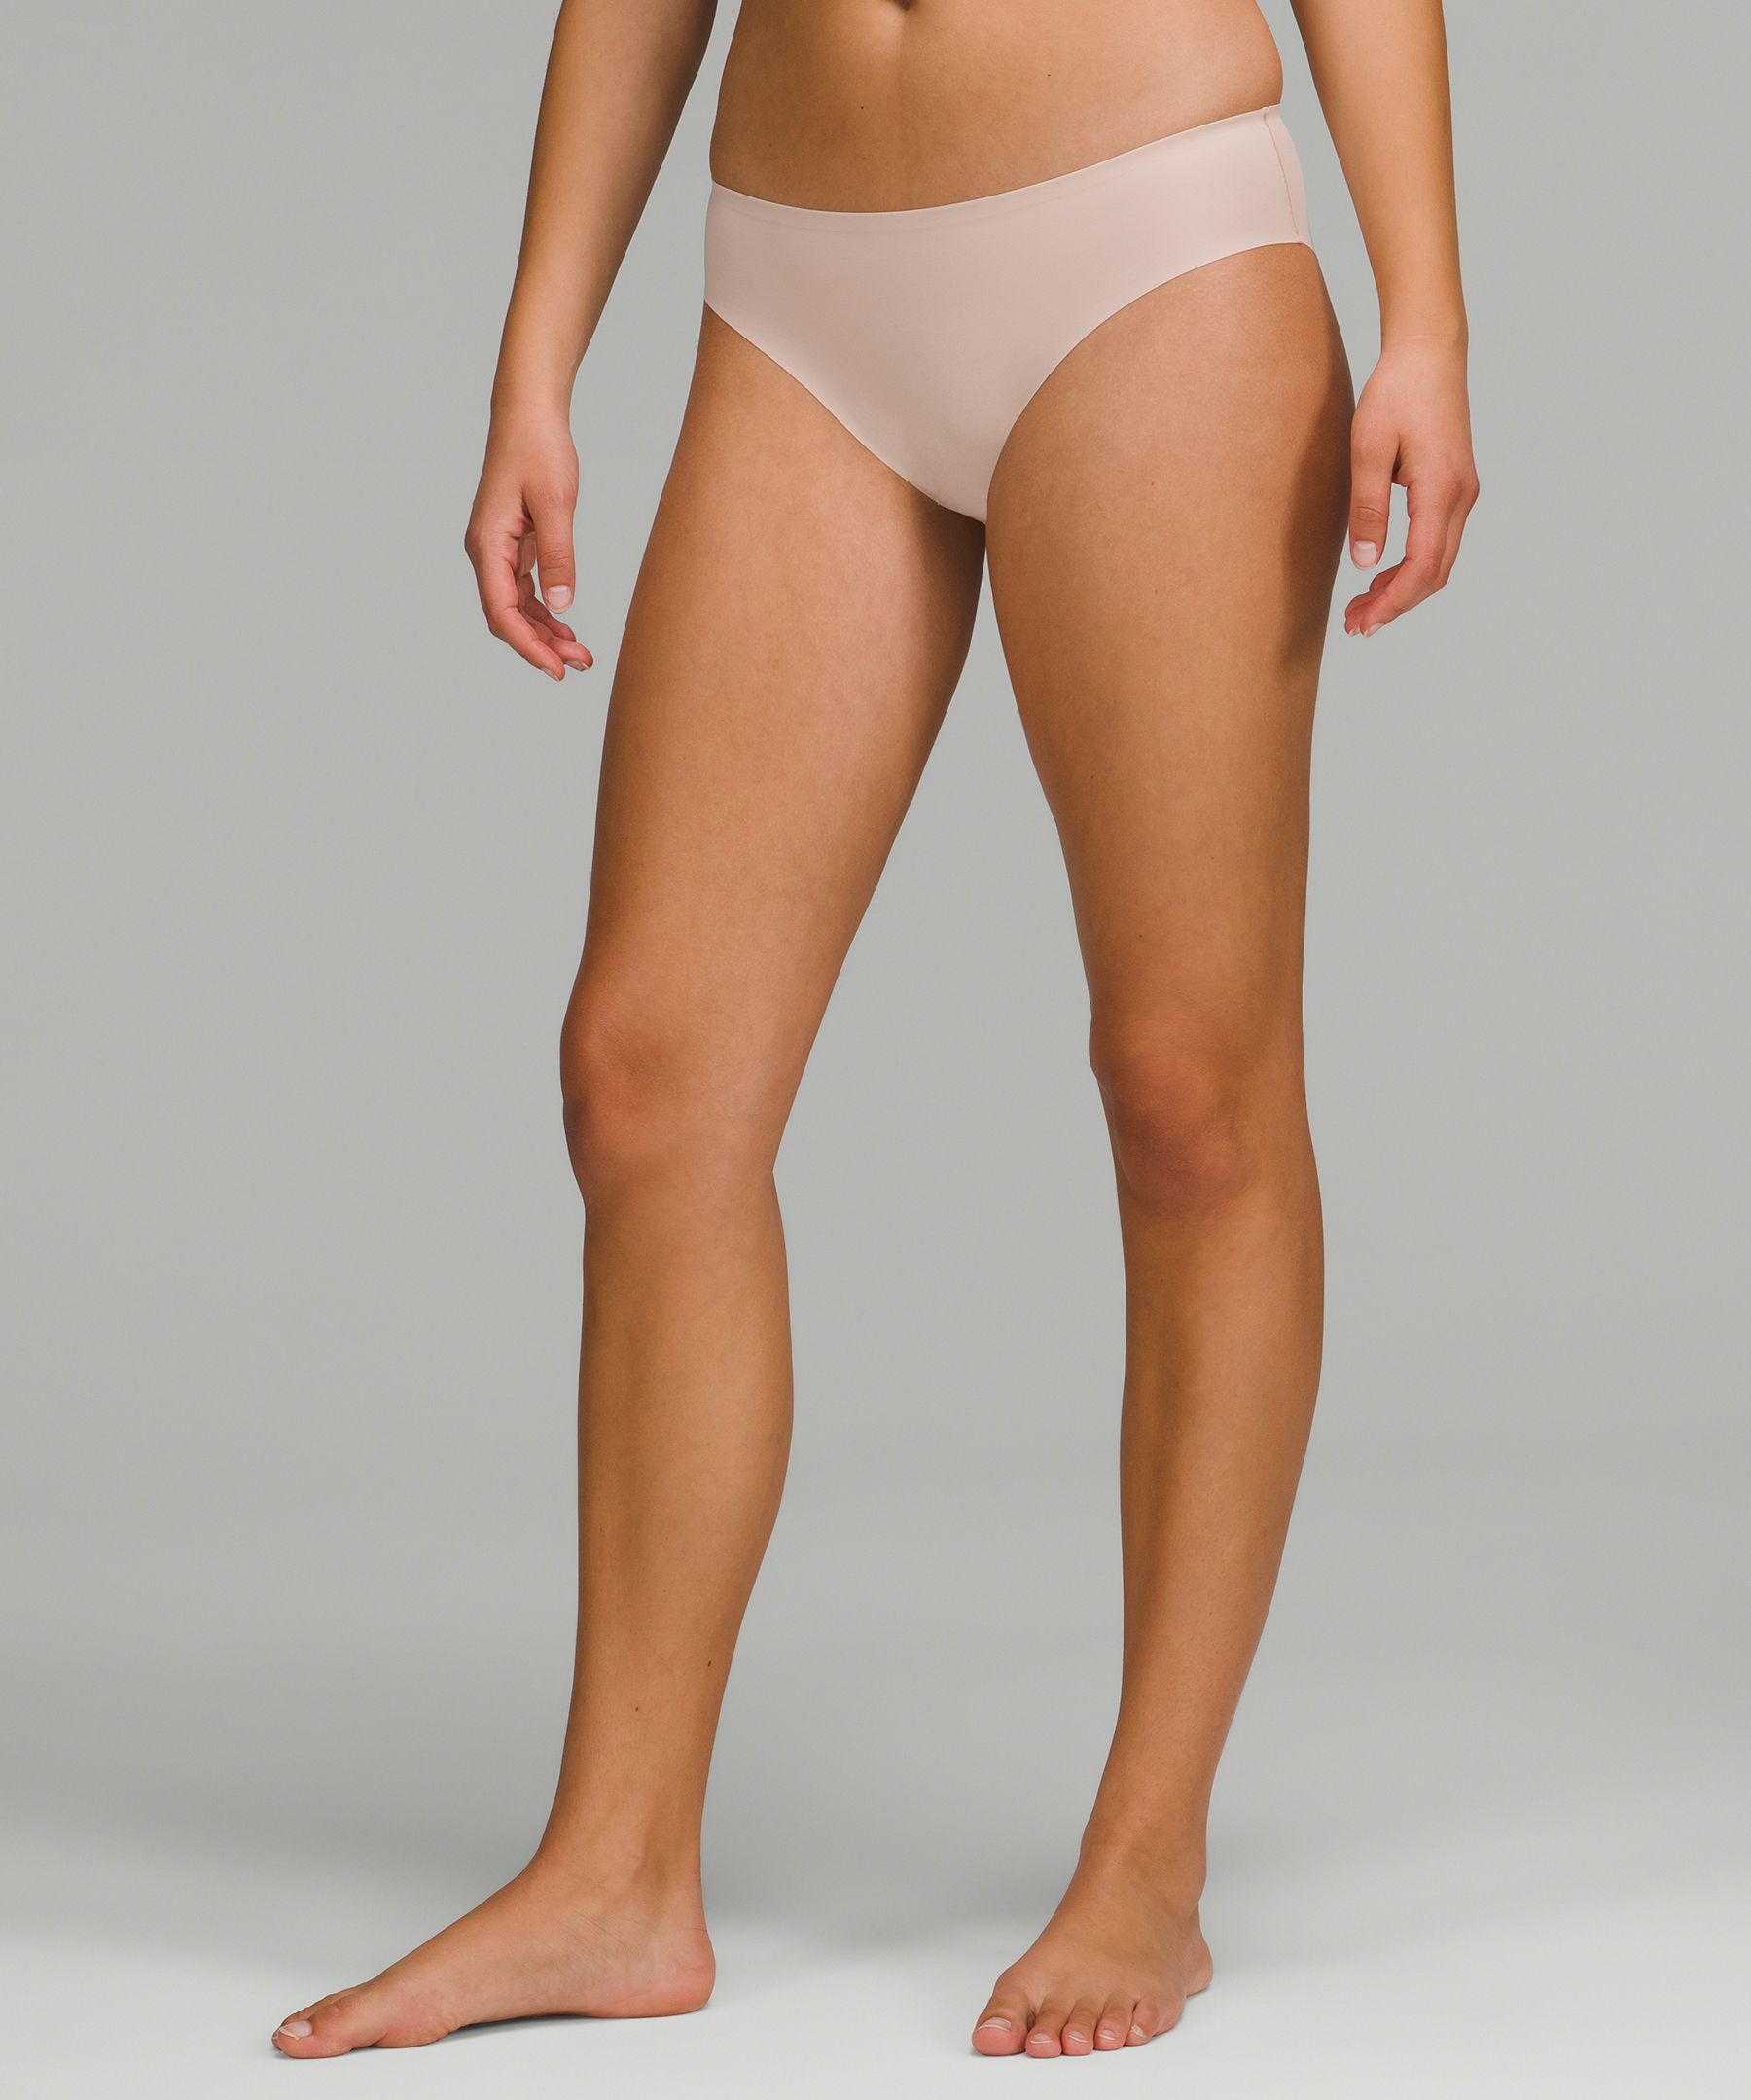 Lululemon Invisiwear Mid-Rise Thong Underwear *3 Pack - Big Apple